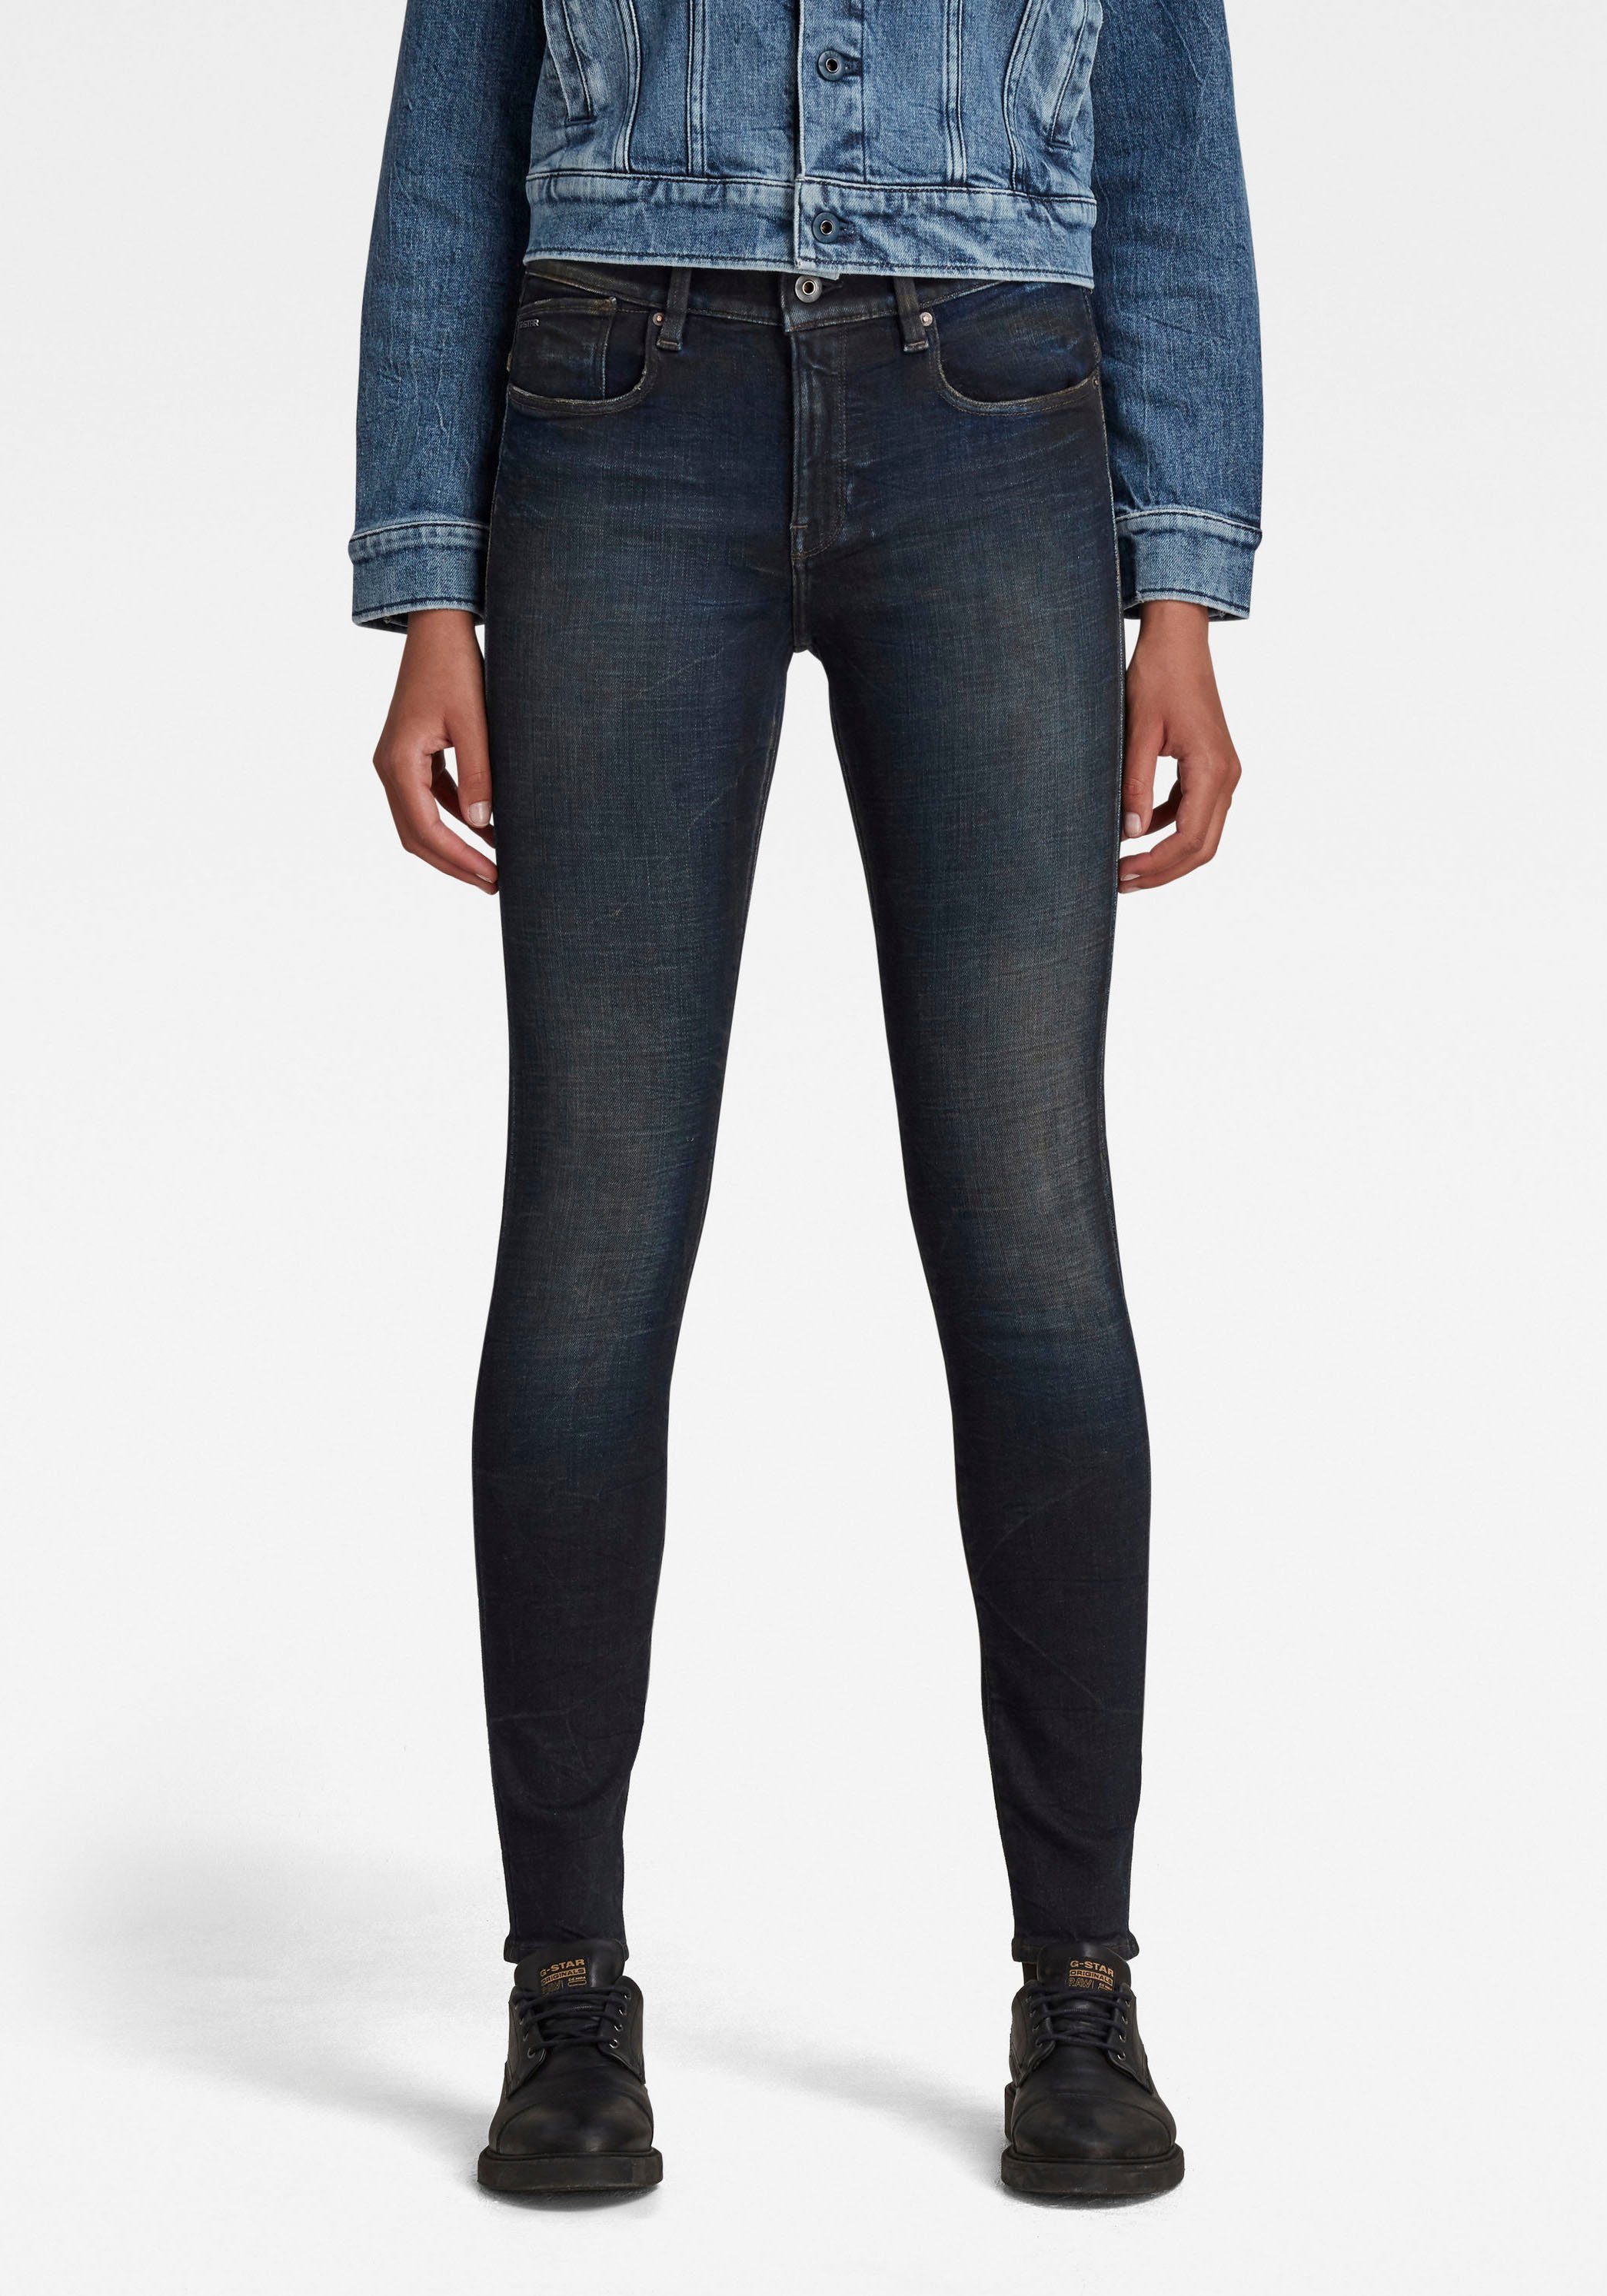 G-Star RAW Skinny-fit-Jeans »Lhana Skinny Jeans« durch Elasthan-Anteil  perfekter Sitz online kaufen | OTTO